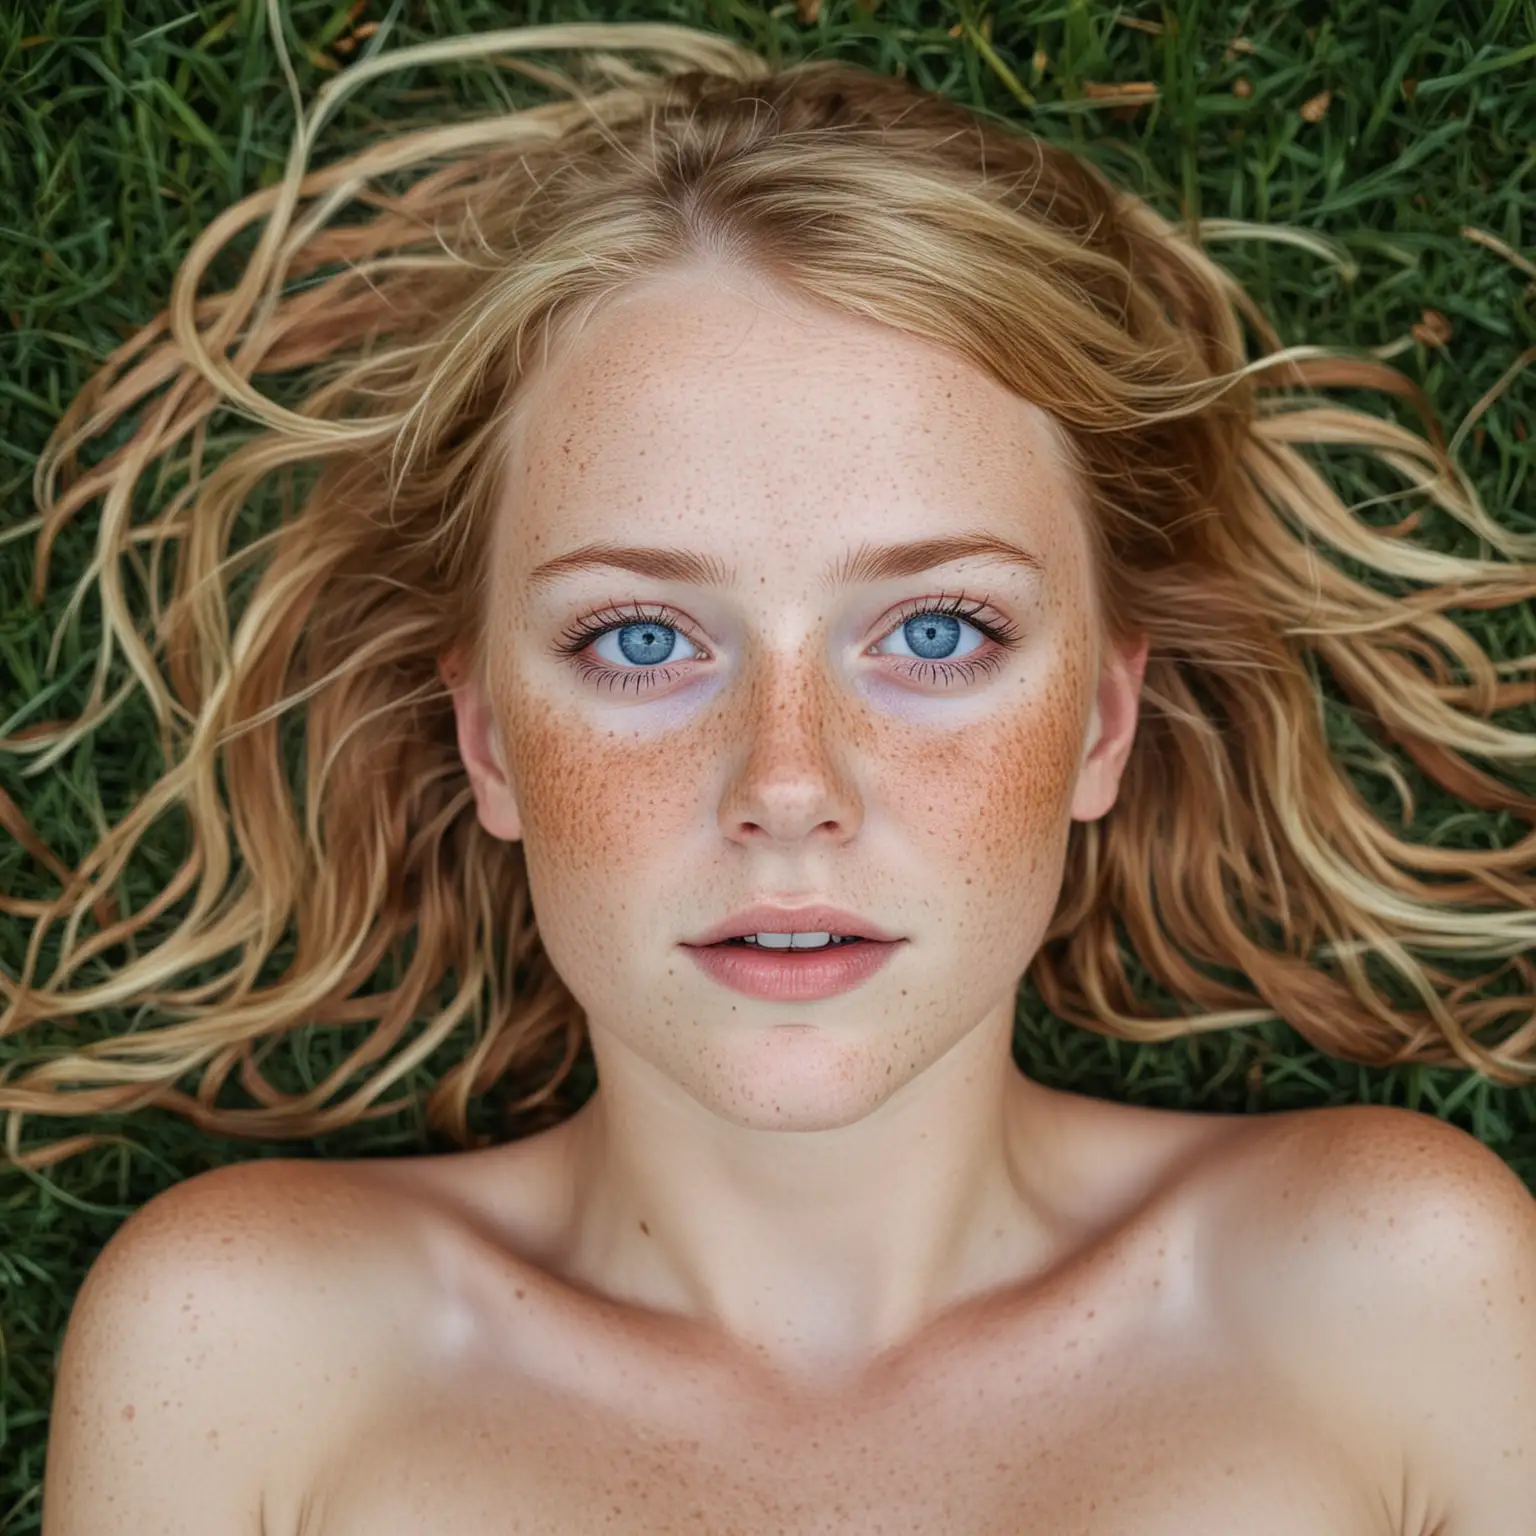 Frightened Blonde Girl Lying in Grass